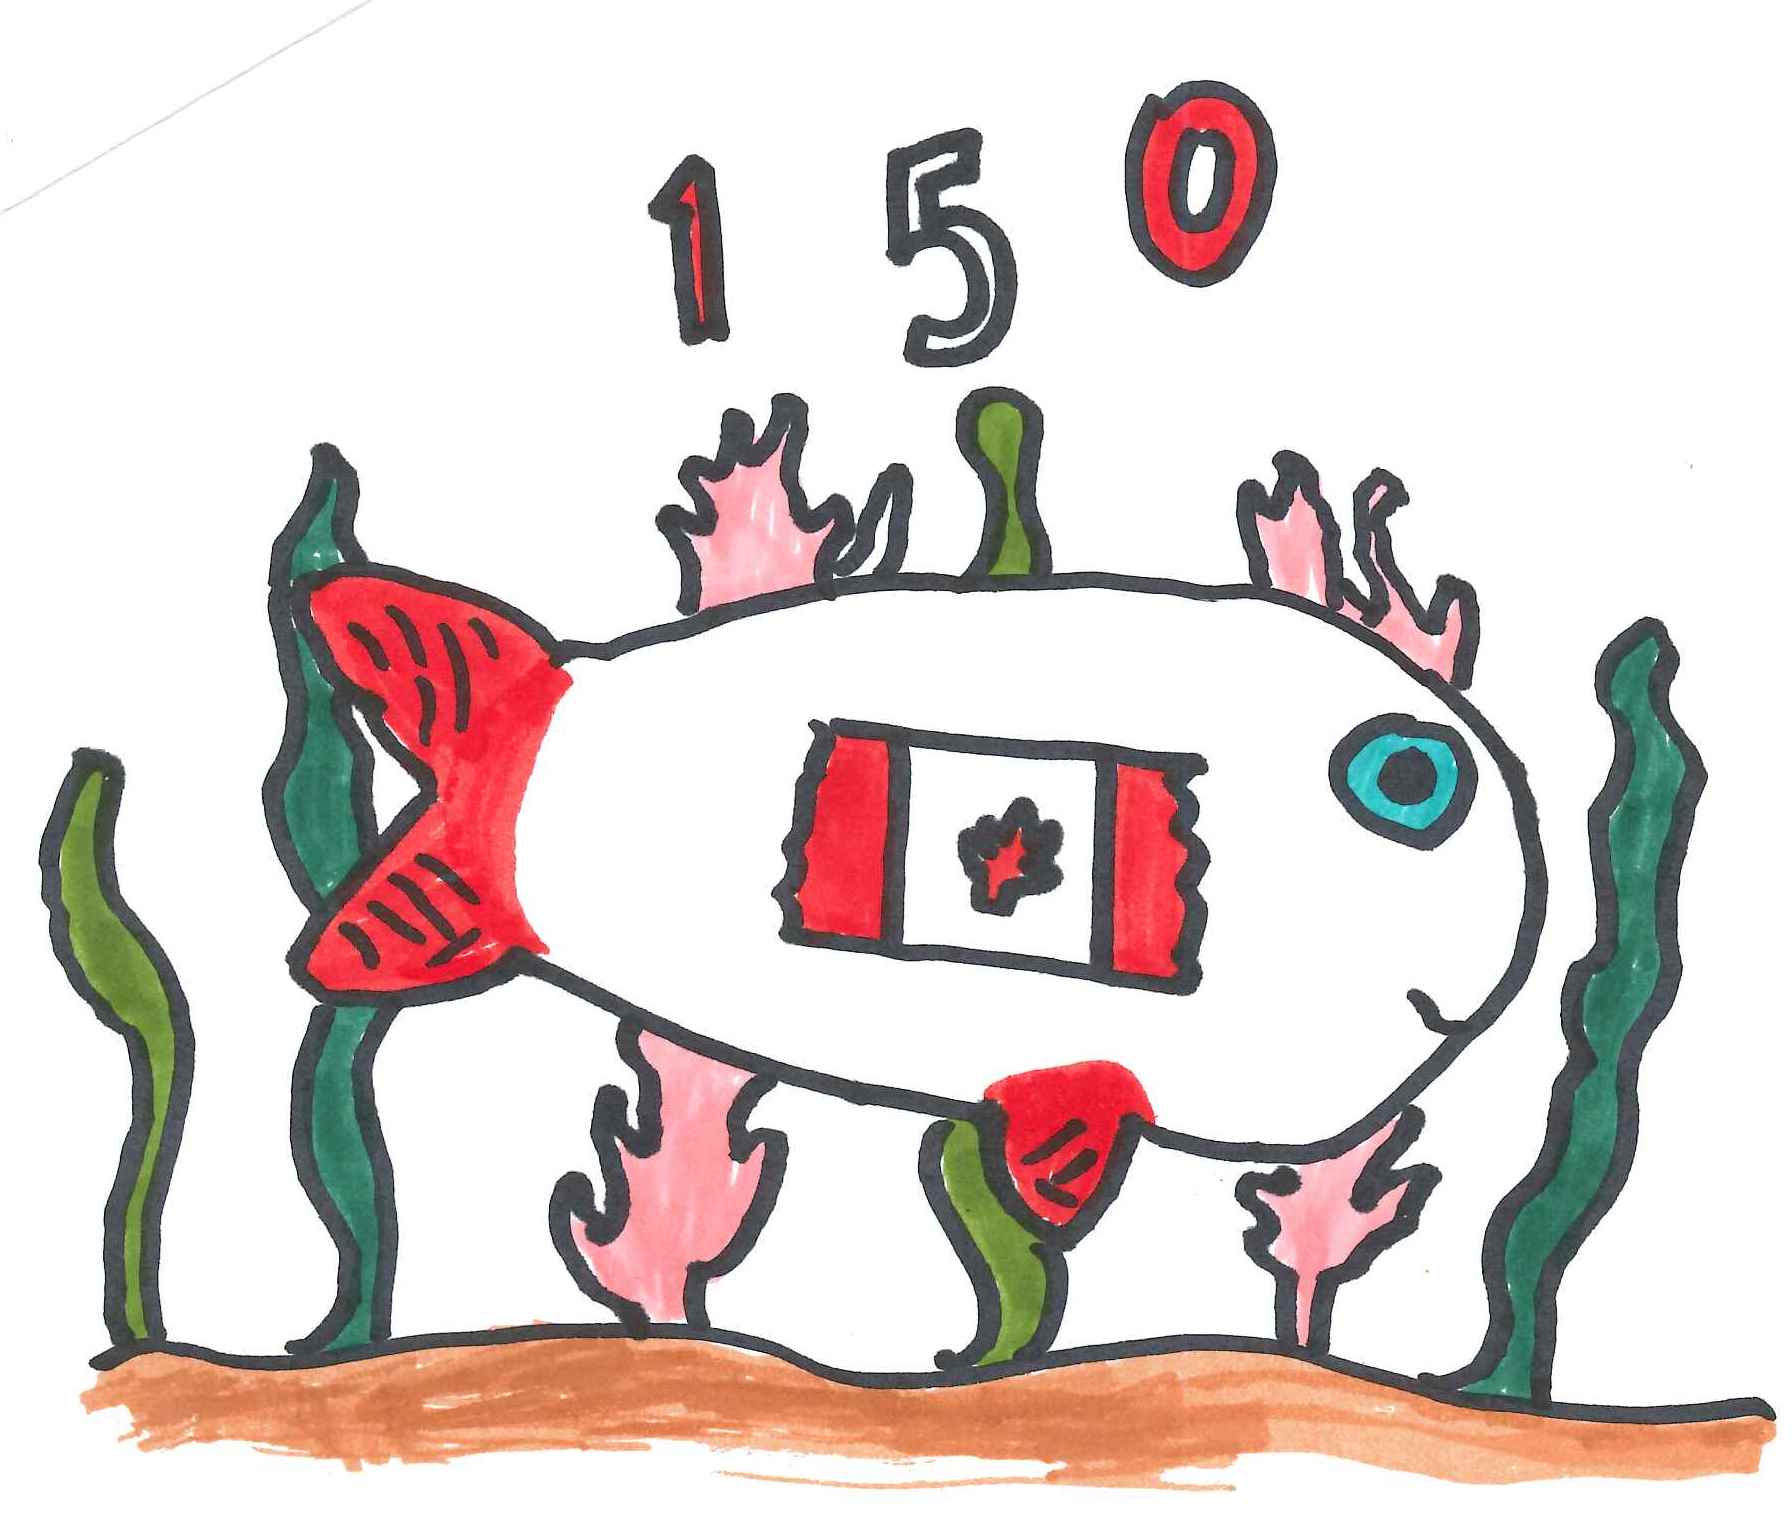 Third Special Mention: Riley C. Grade 3. "150 fish"